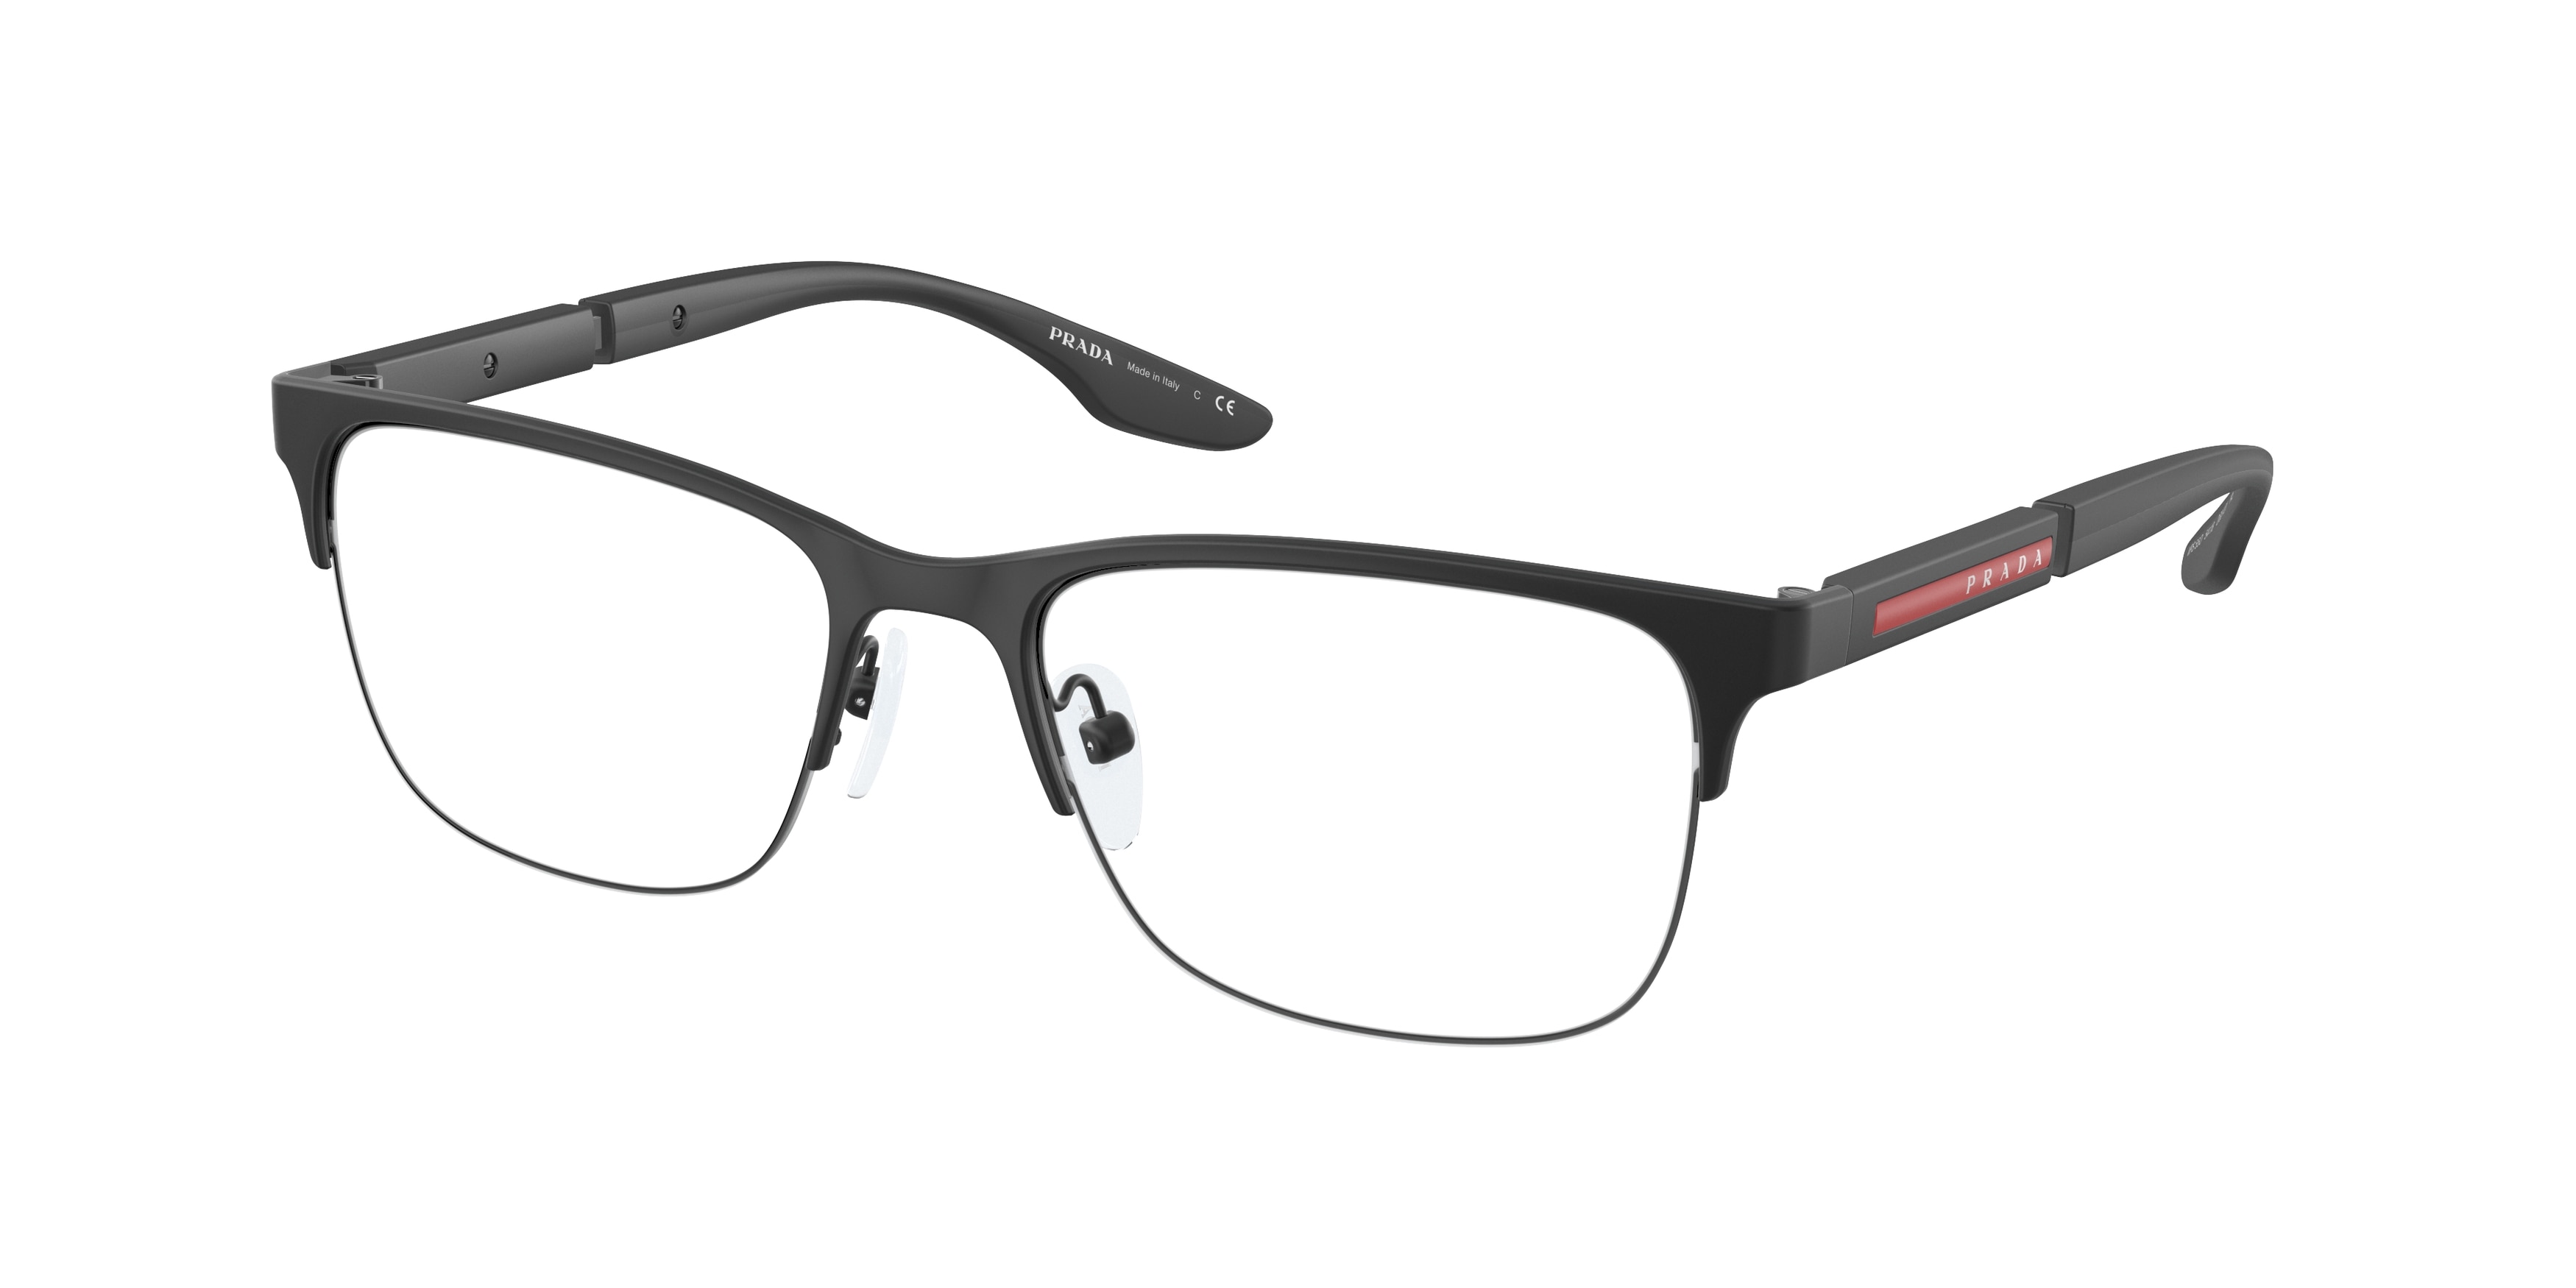 Buy Prada Linea Rossa PS 55OV 16c1o1 Matte Black prescription Glasses